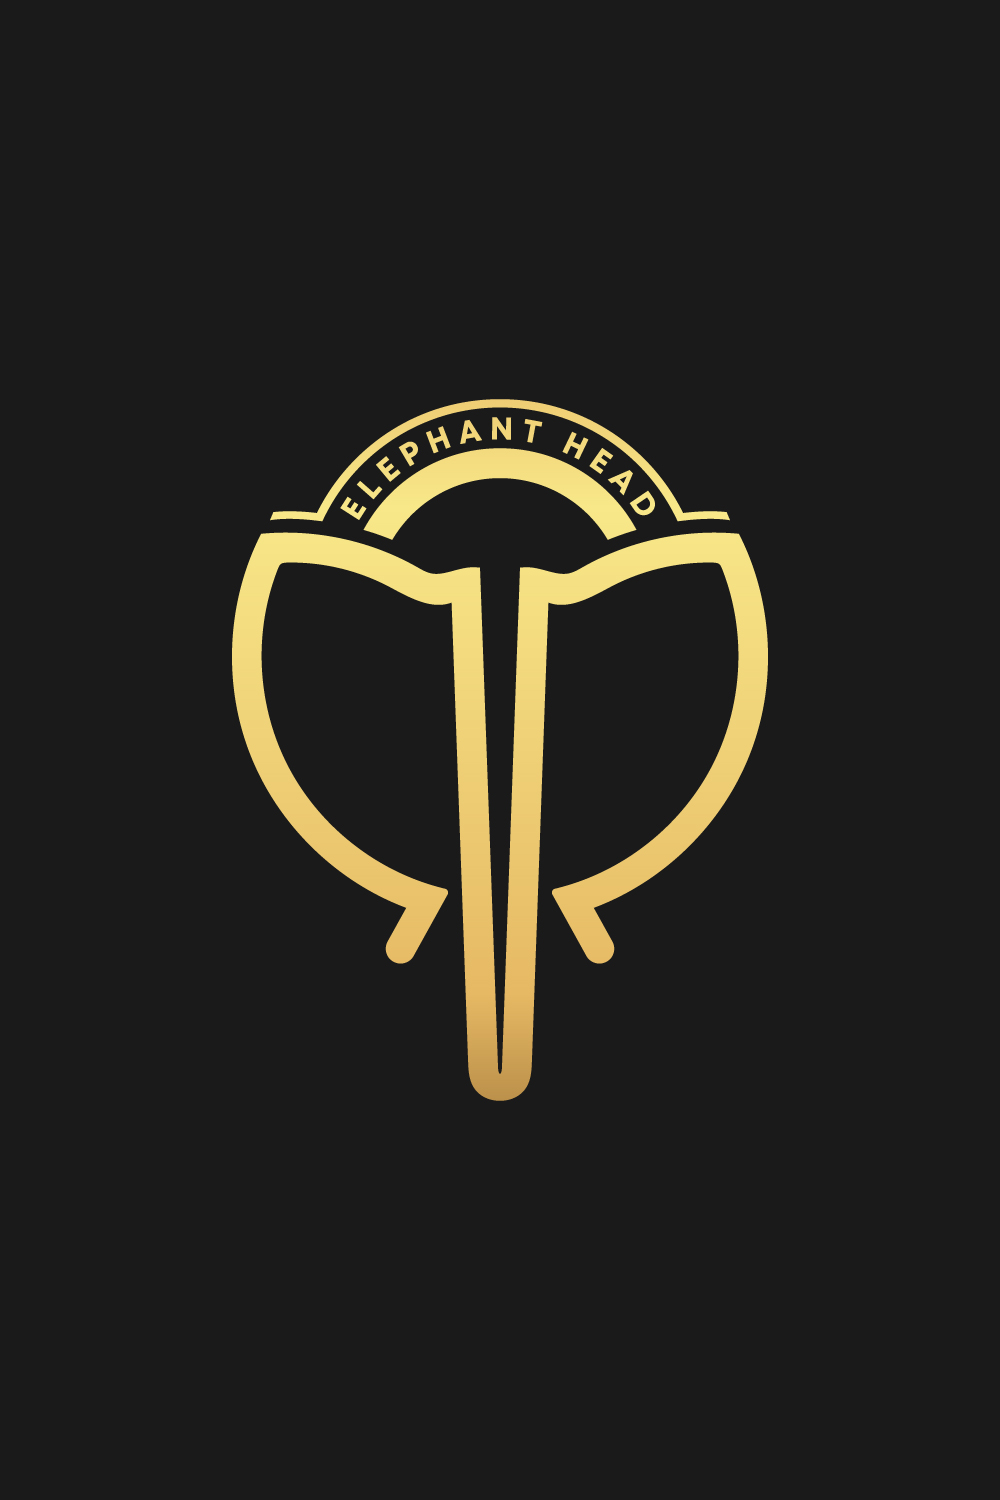 Elephant Head Luxury logo design pinterest preview image.